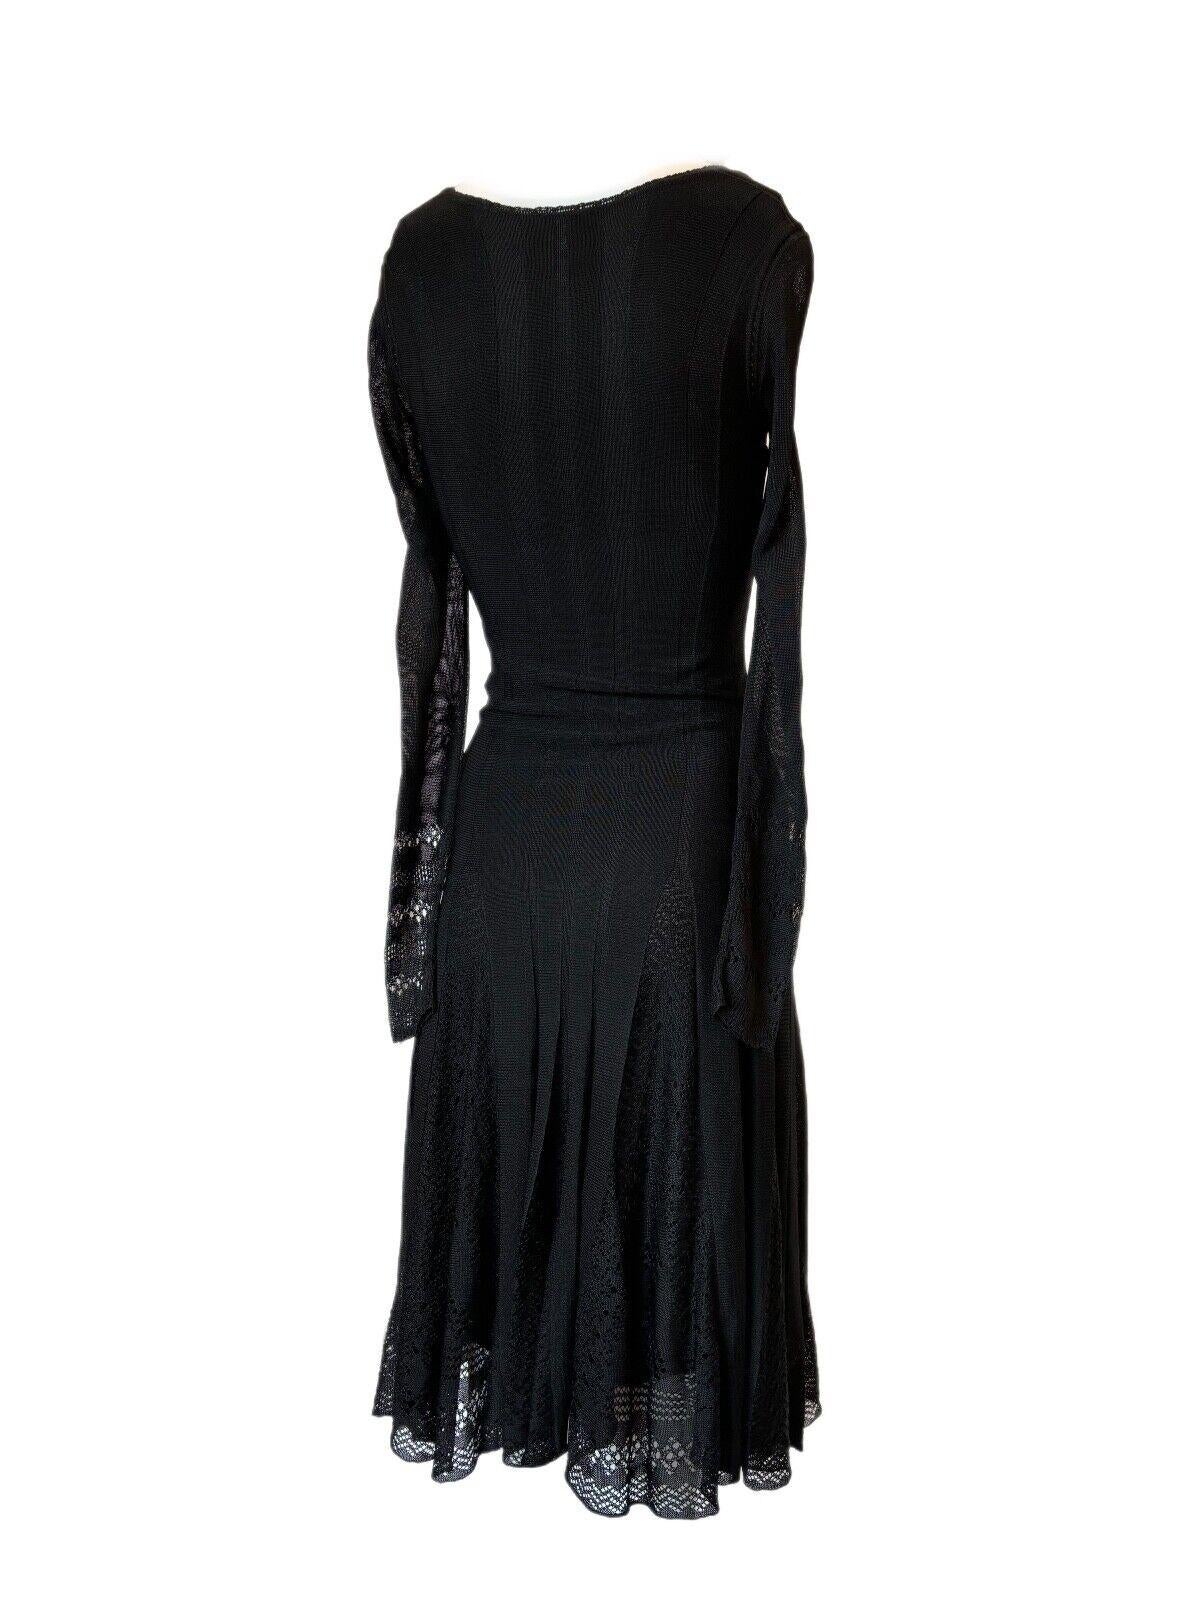 CHANEL 2005 vintage black pointelle long sleeve dress For Sale 1